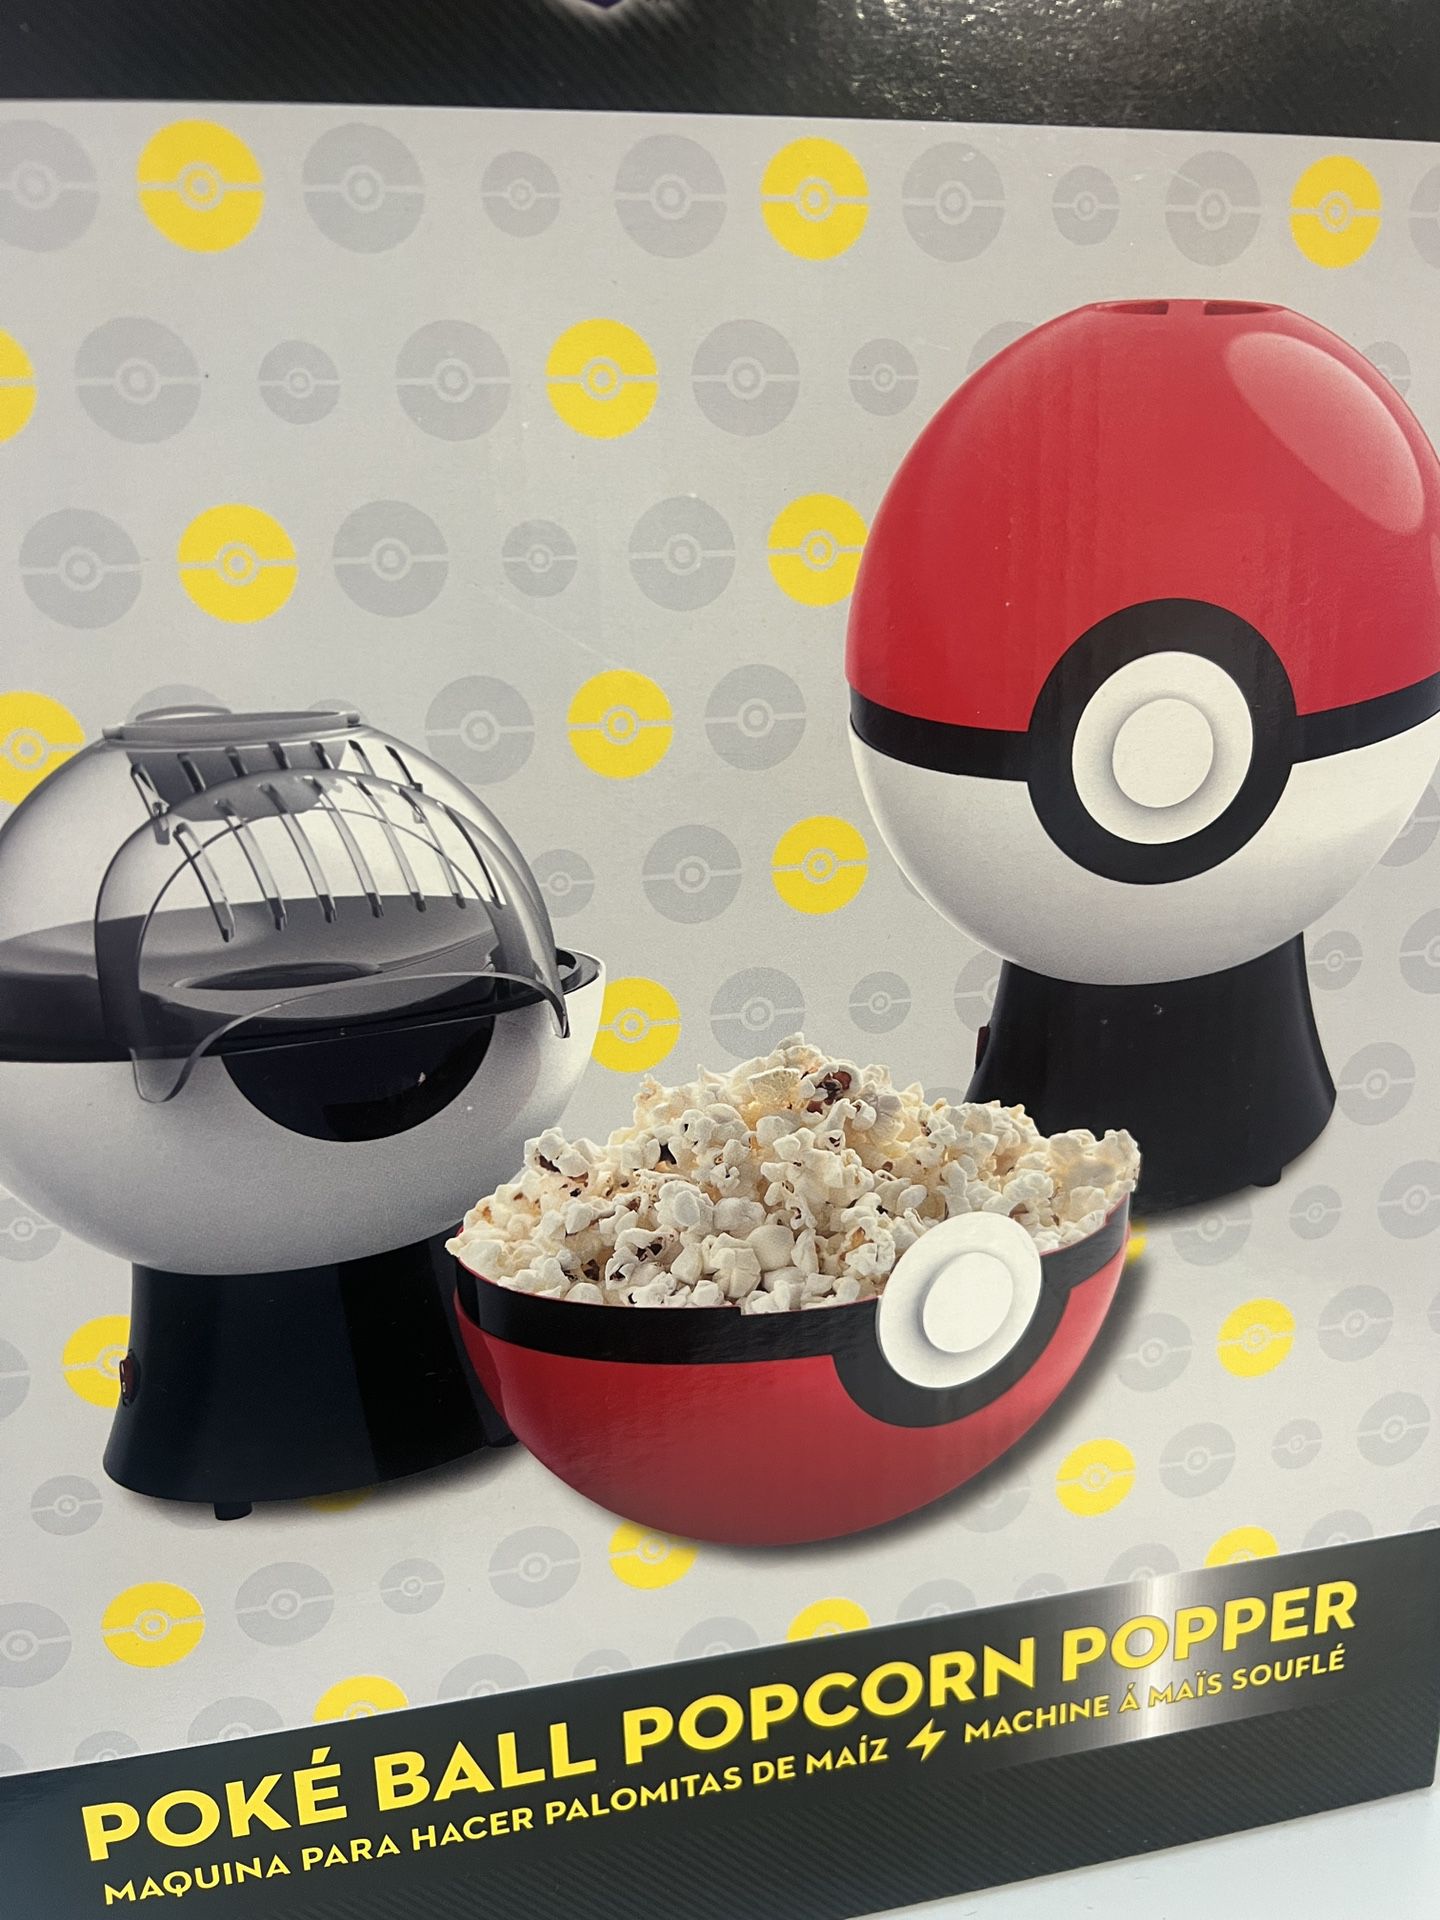 Pokemon Poke Ball Popcorn Popper